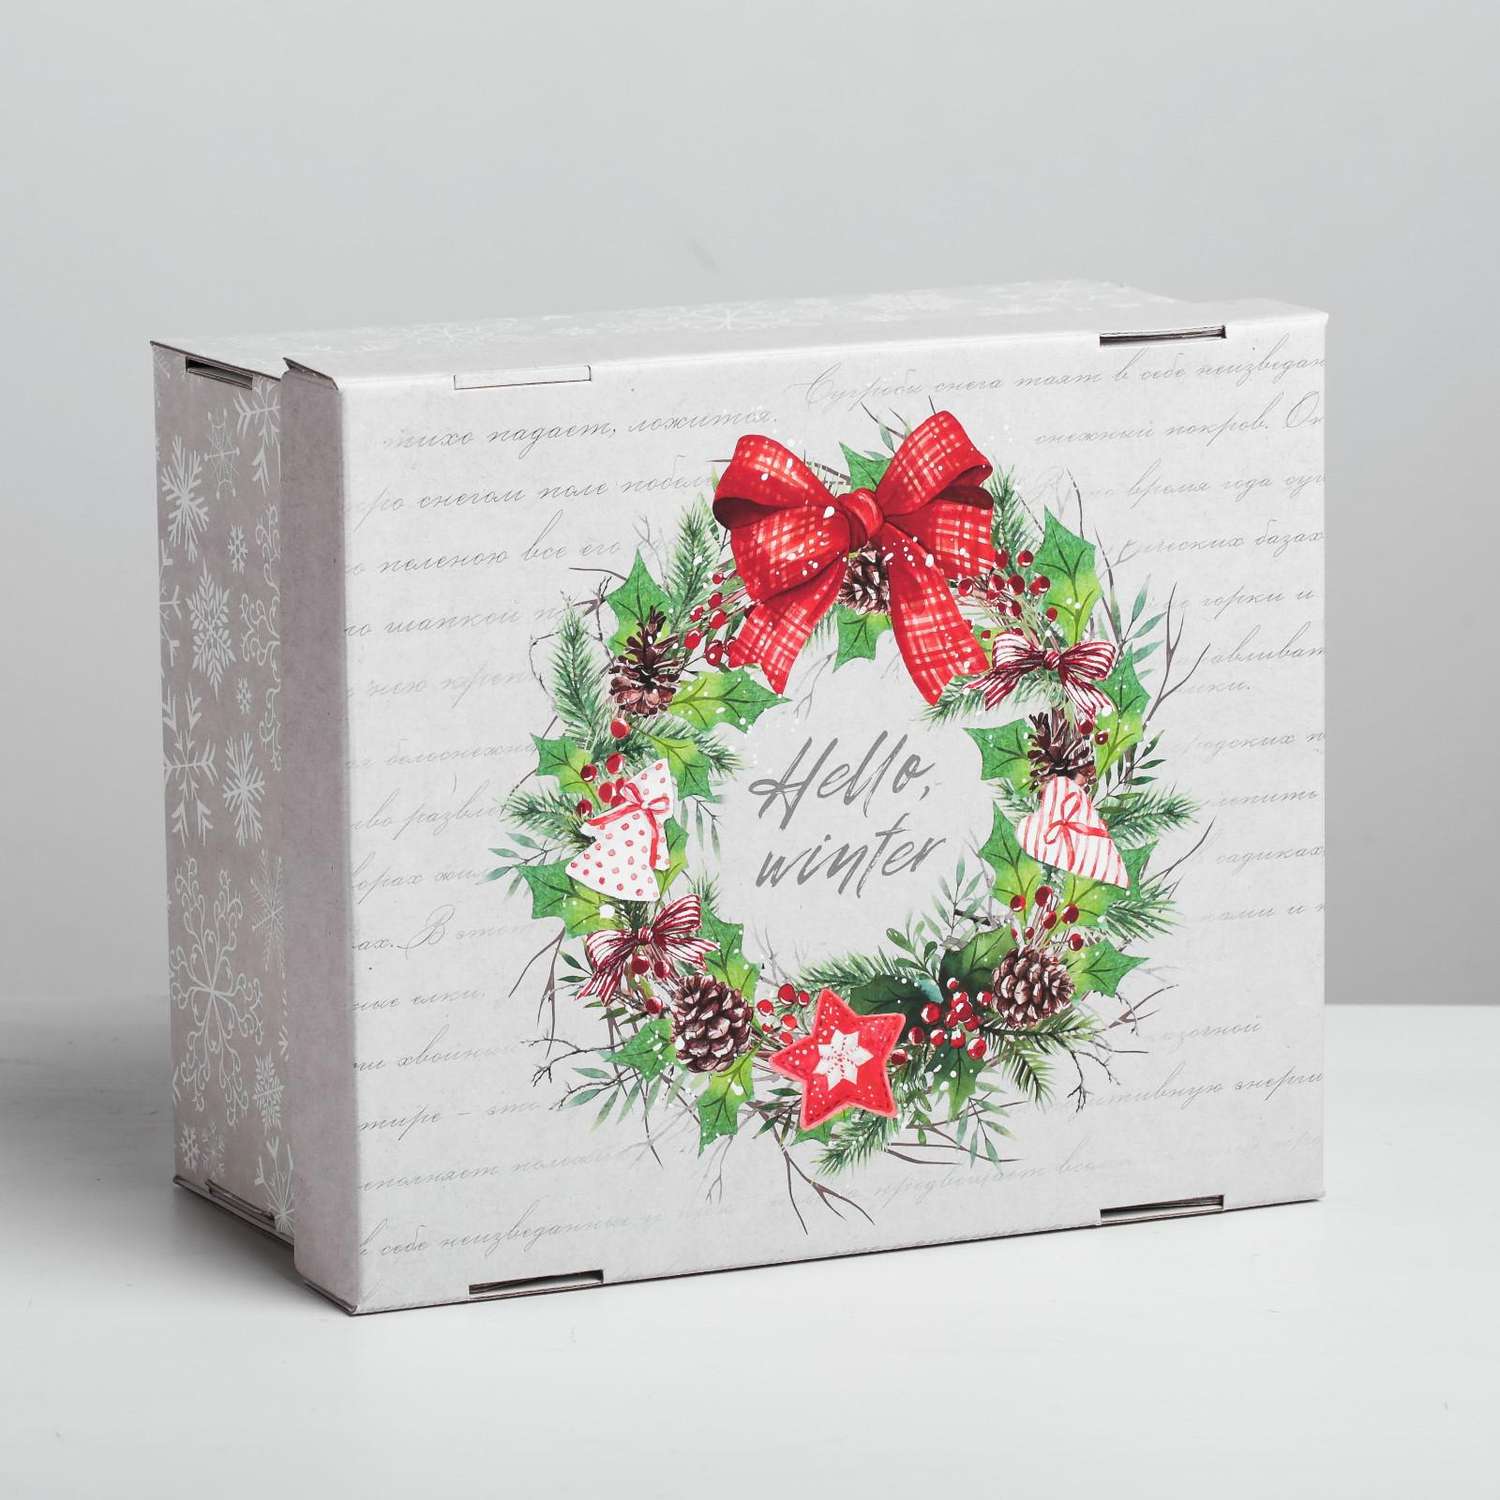 Складная коробка Дарите Счастье «Hello. winter». 31.2×25.6×16.1 см - фото 2